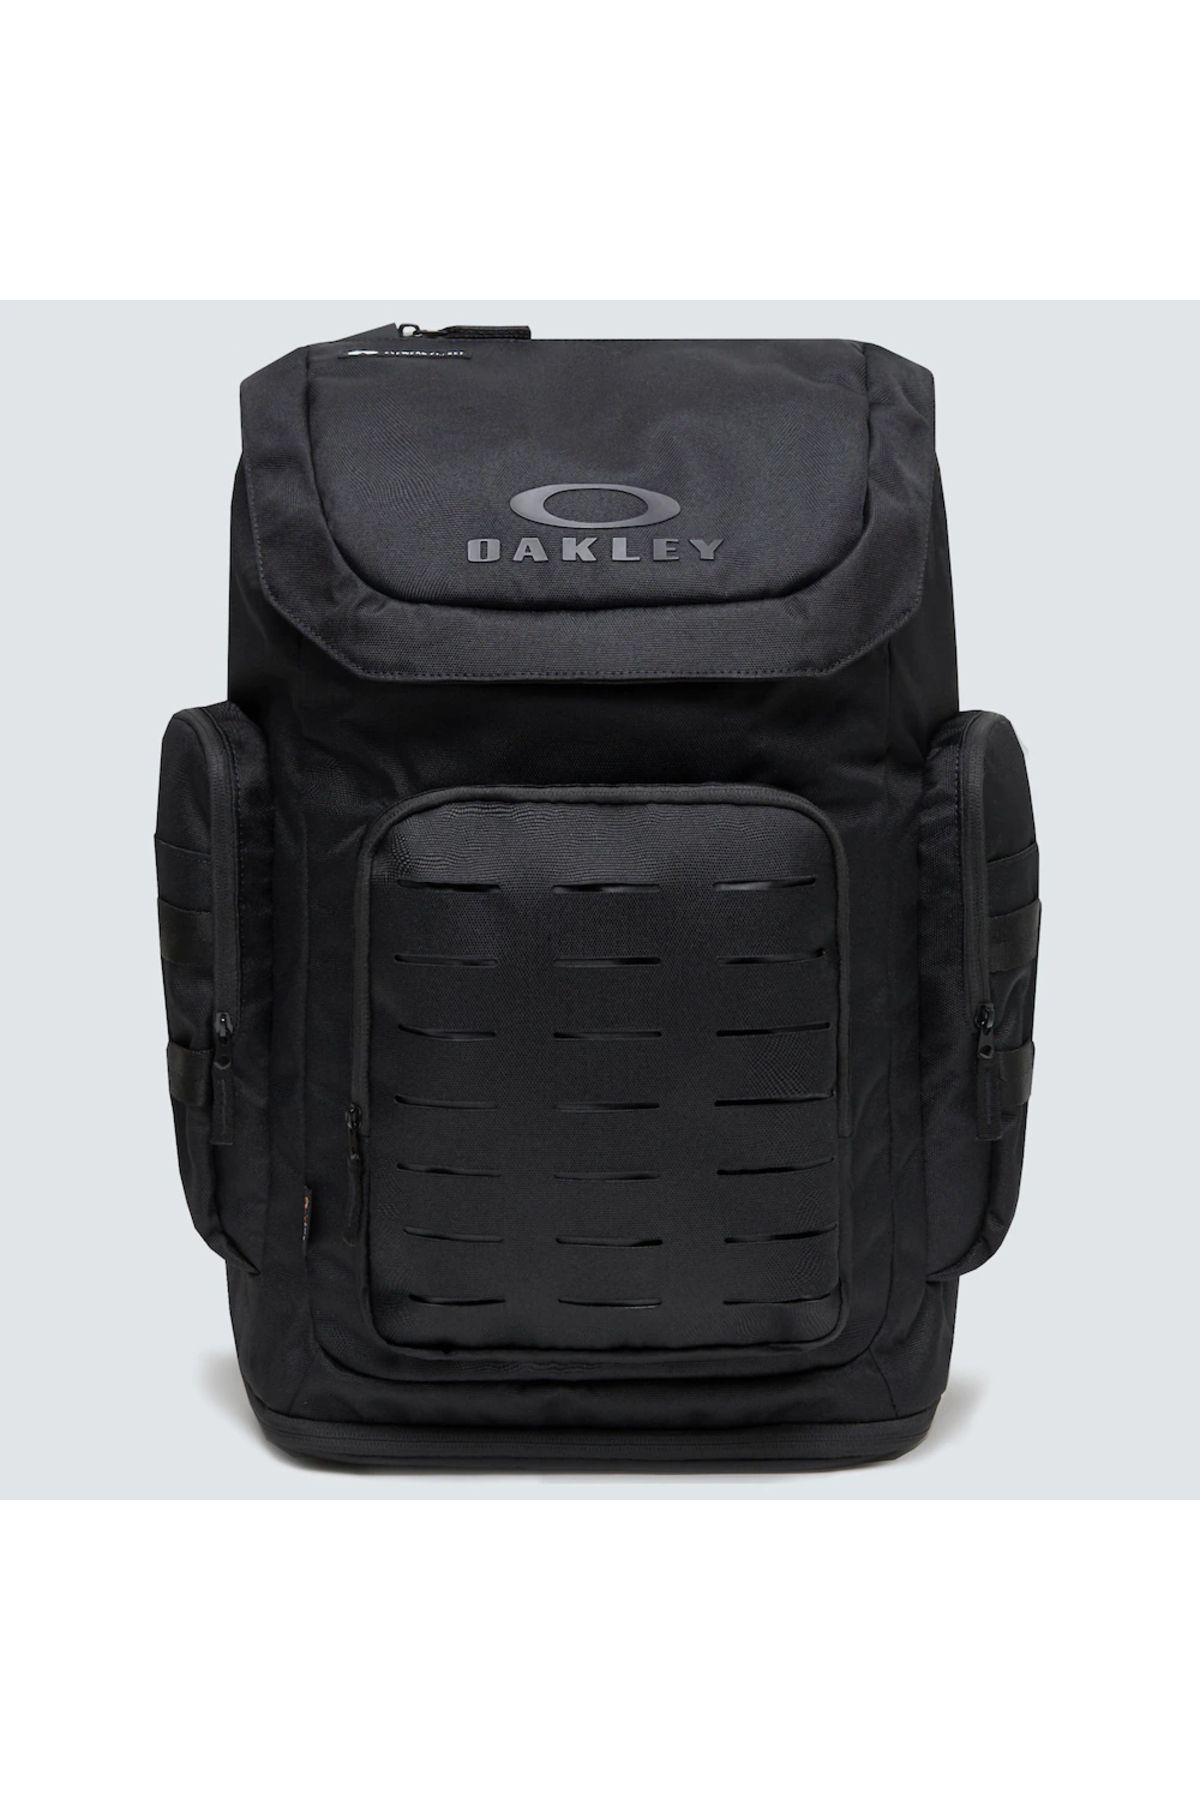 Oakley Siyah Erkek 30x49,5x17,5 Sırt Çantası FOS900293 Urban Ruck Pack